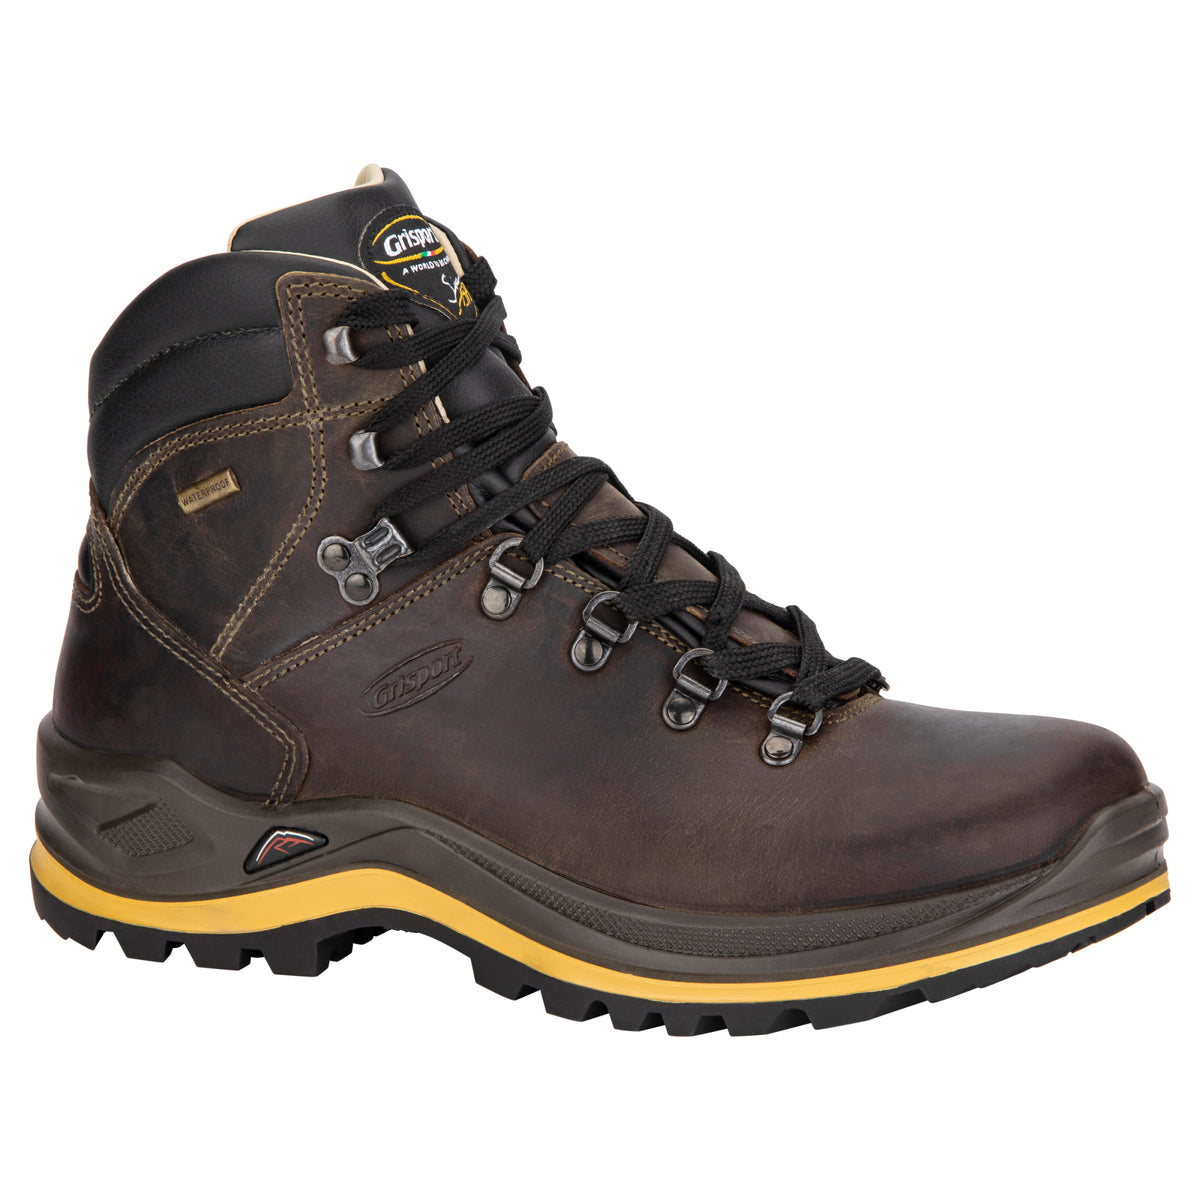 Grisport Classic Mid Waterproof Hiking Boots (Dark Chocolate) – Allgoods